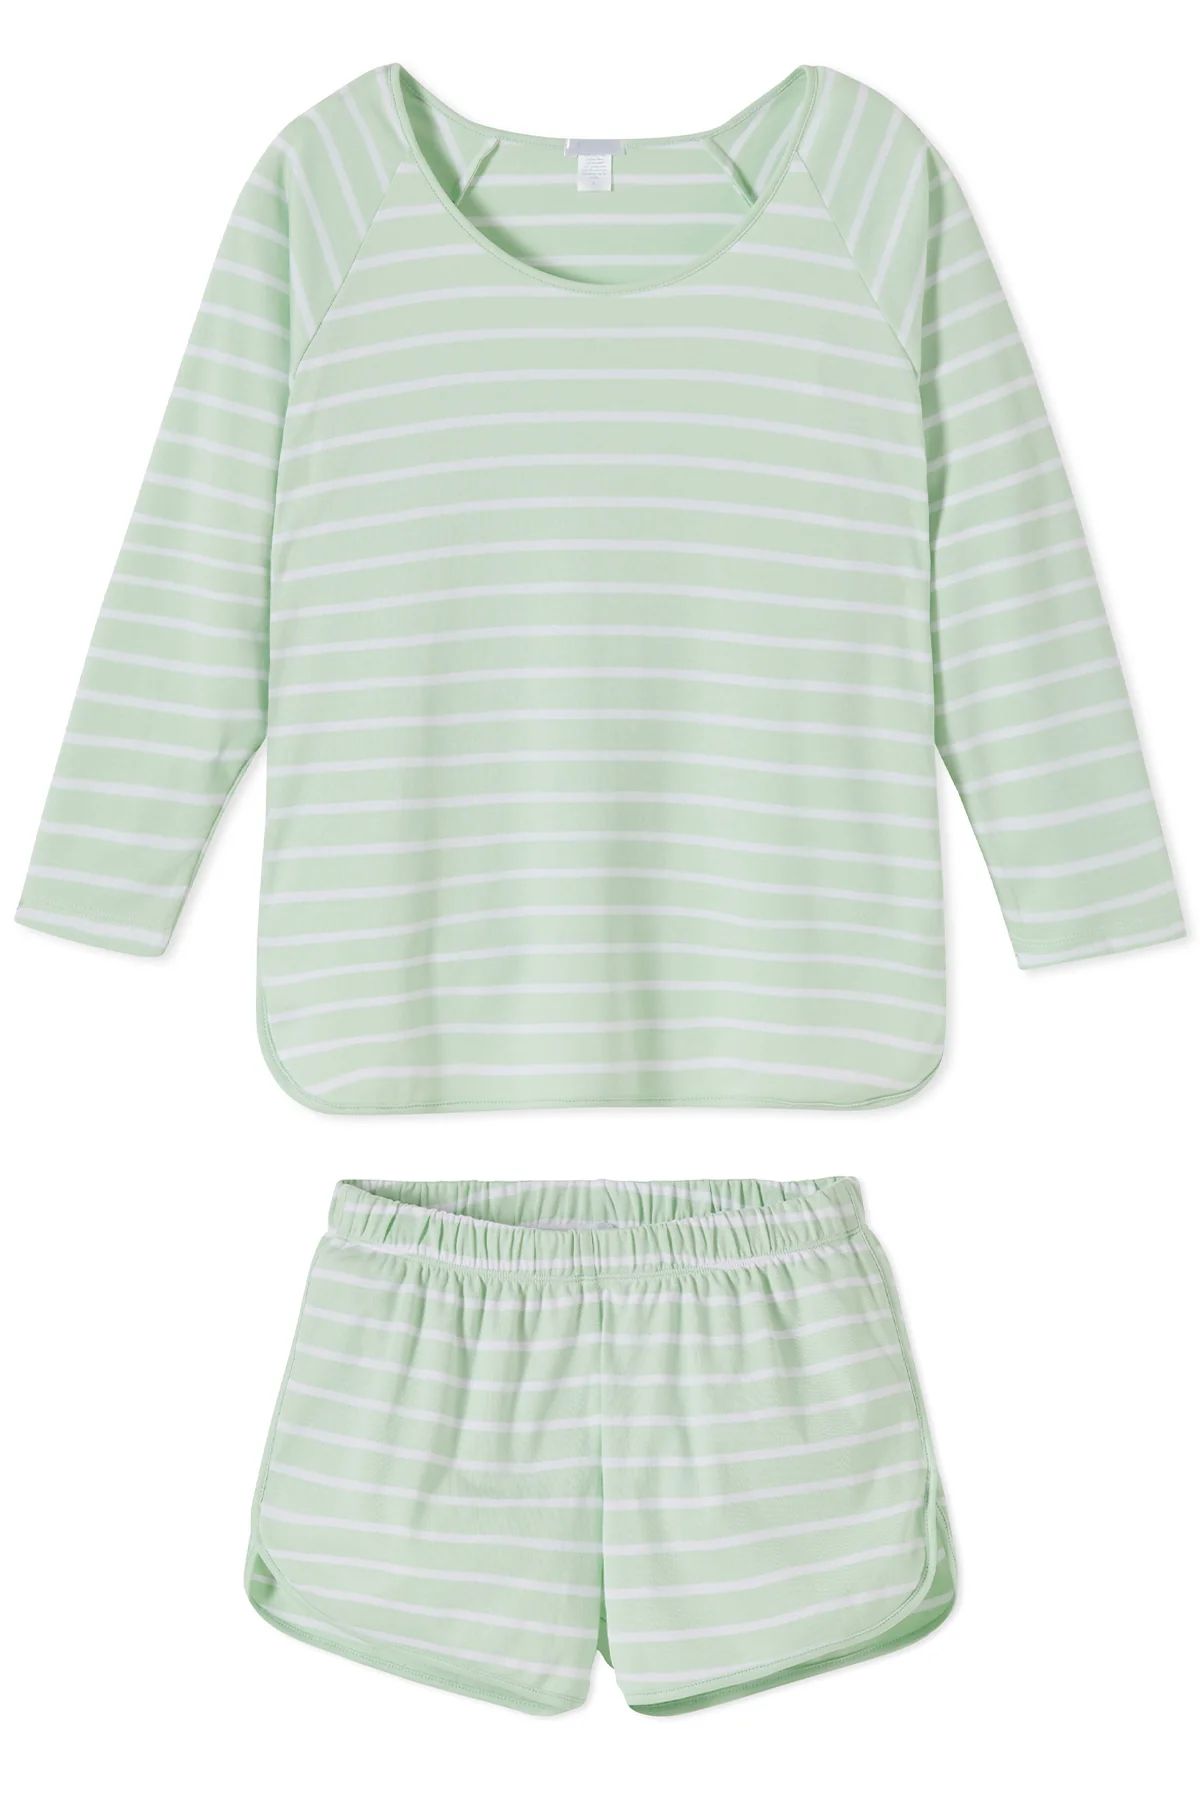 Pima Long-Short Set in Mist | LAKE Pajamas